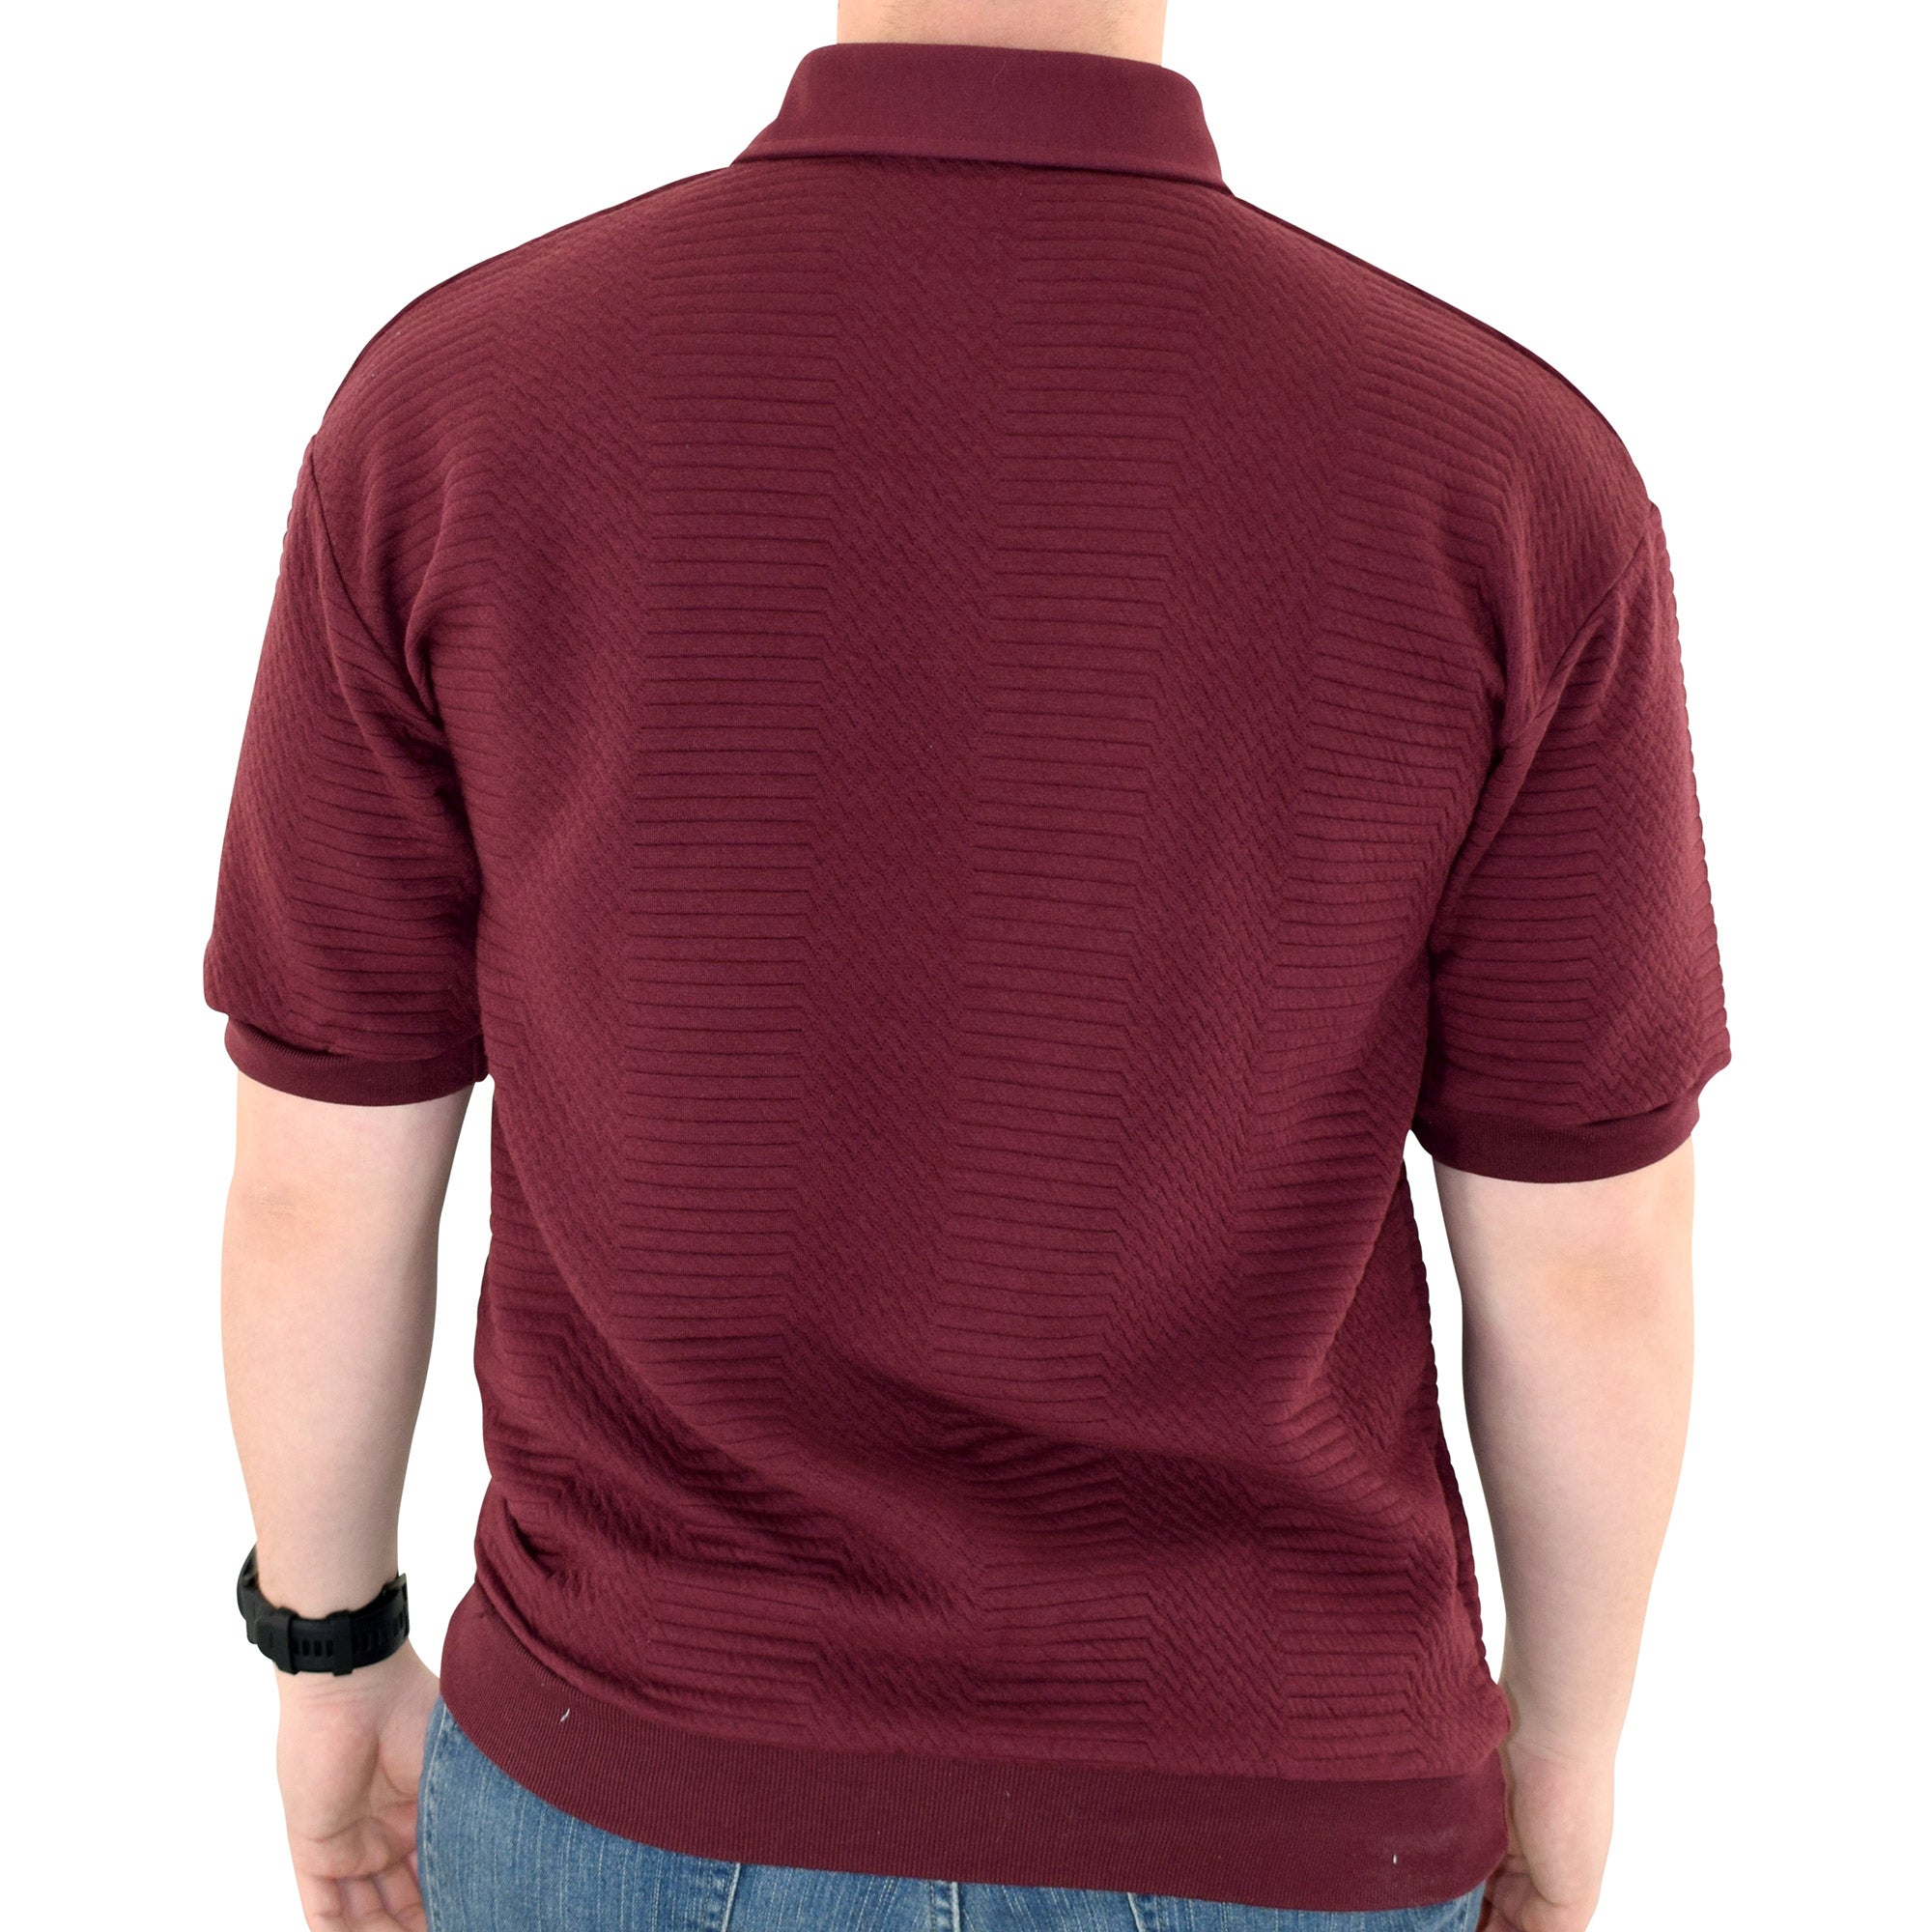 Palmland Solid French Terry Short Sleeve Banded Bottom Polo Shirt 6090-720 Big and Tall - Burgundy - theflagshirt